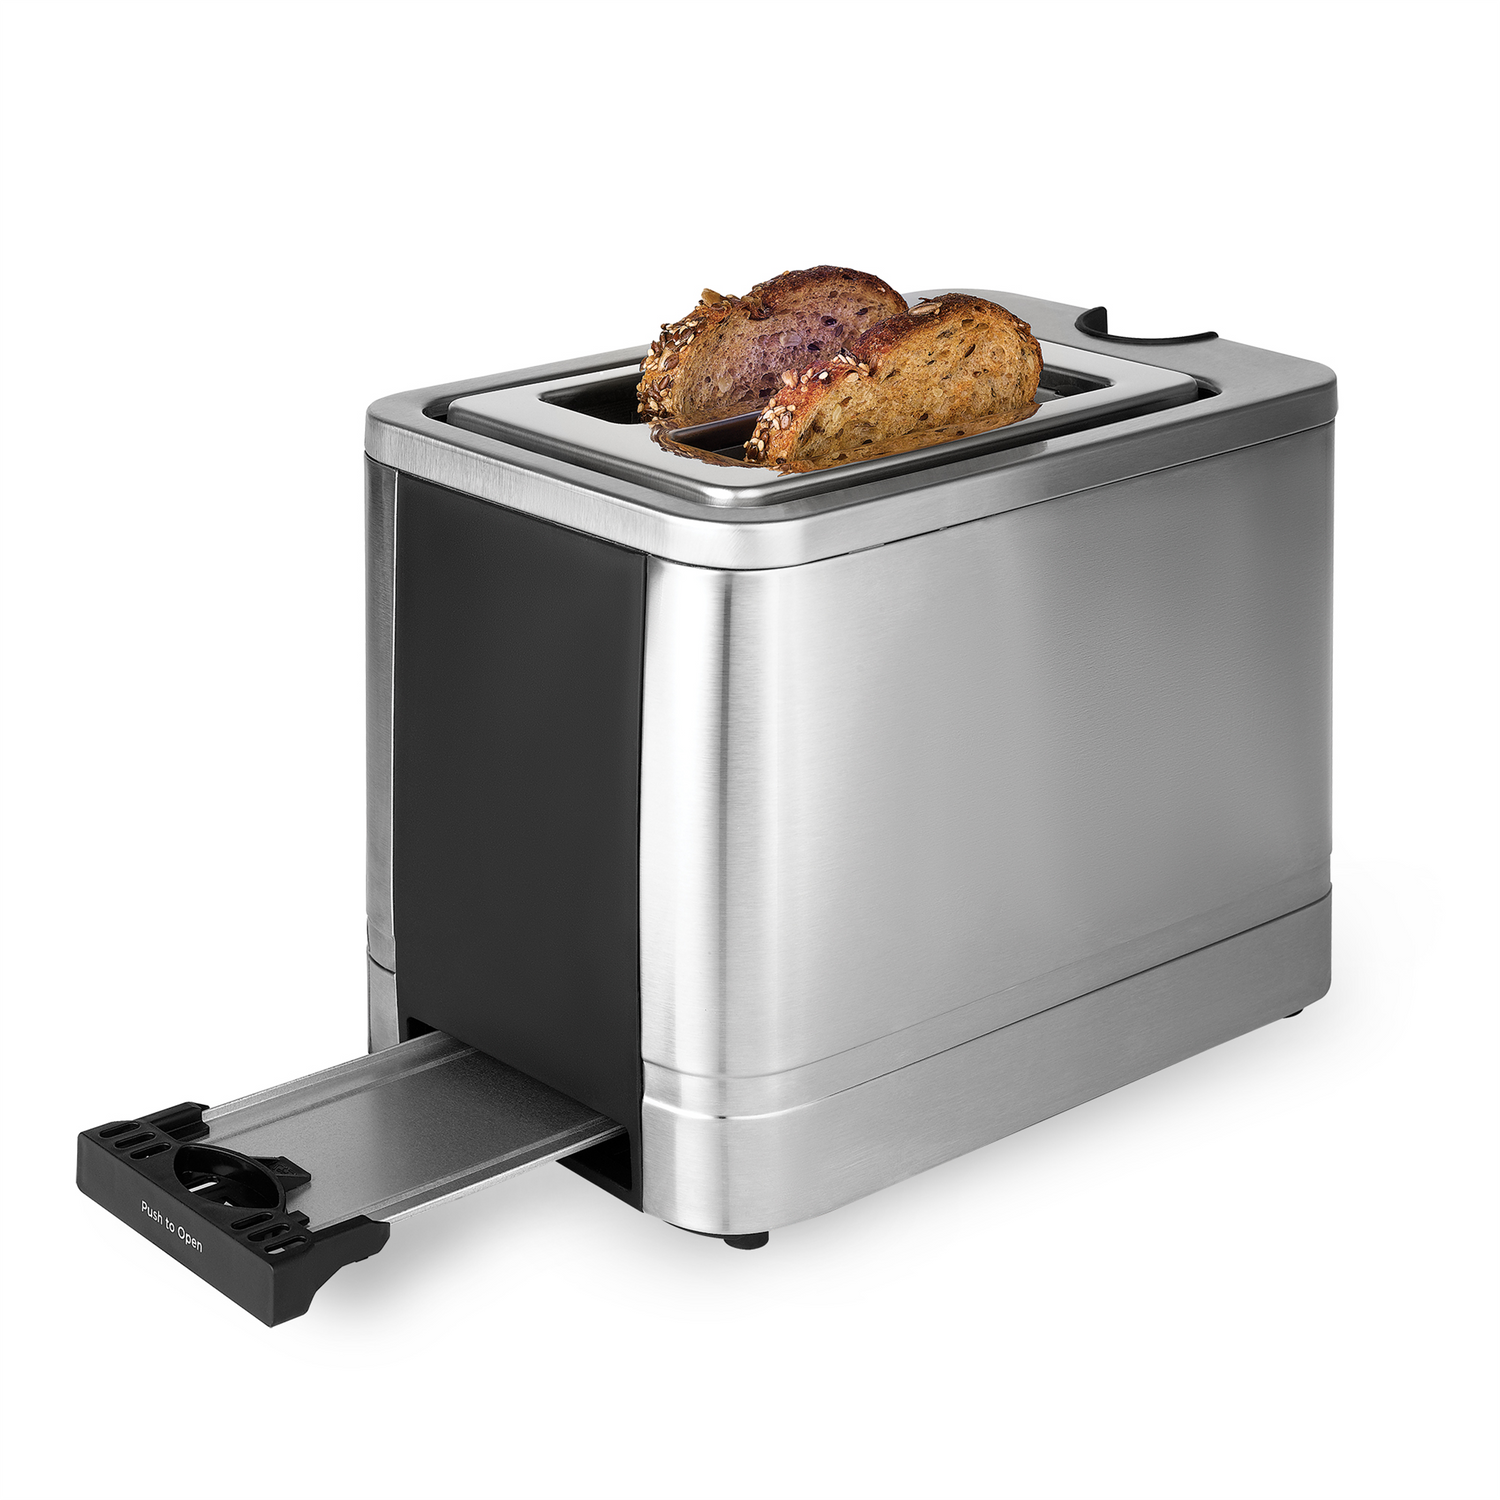 Black Decker 2-Slice Extra Wide Slot Toaster, Iron, Blue & Gray